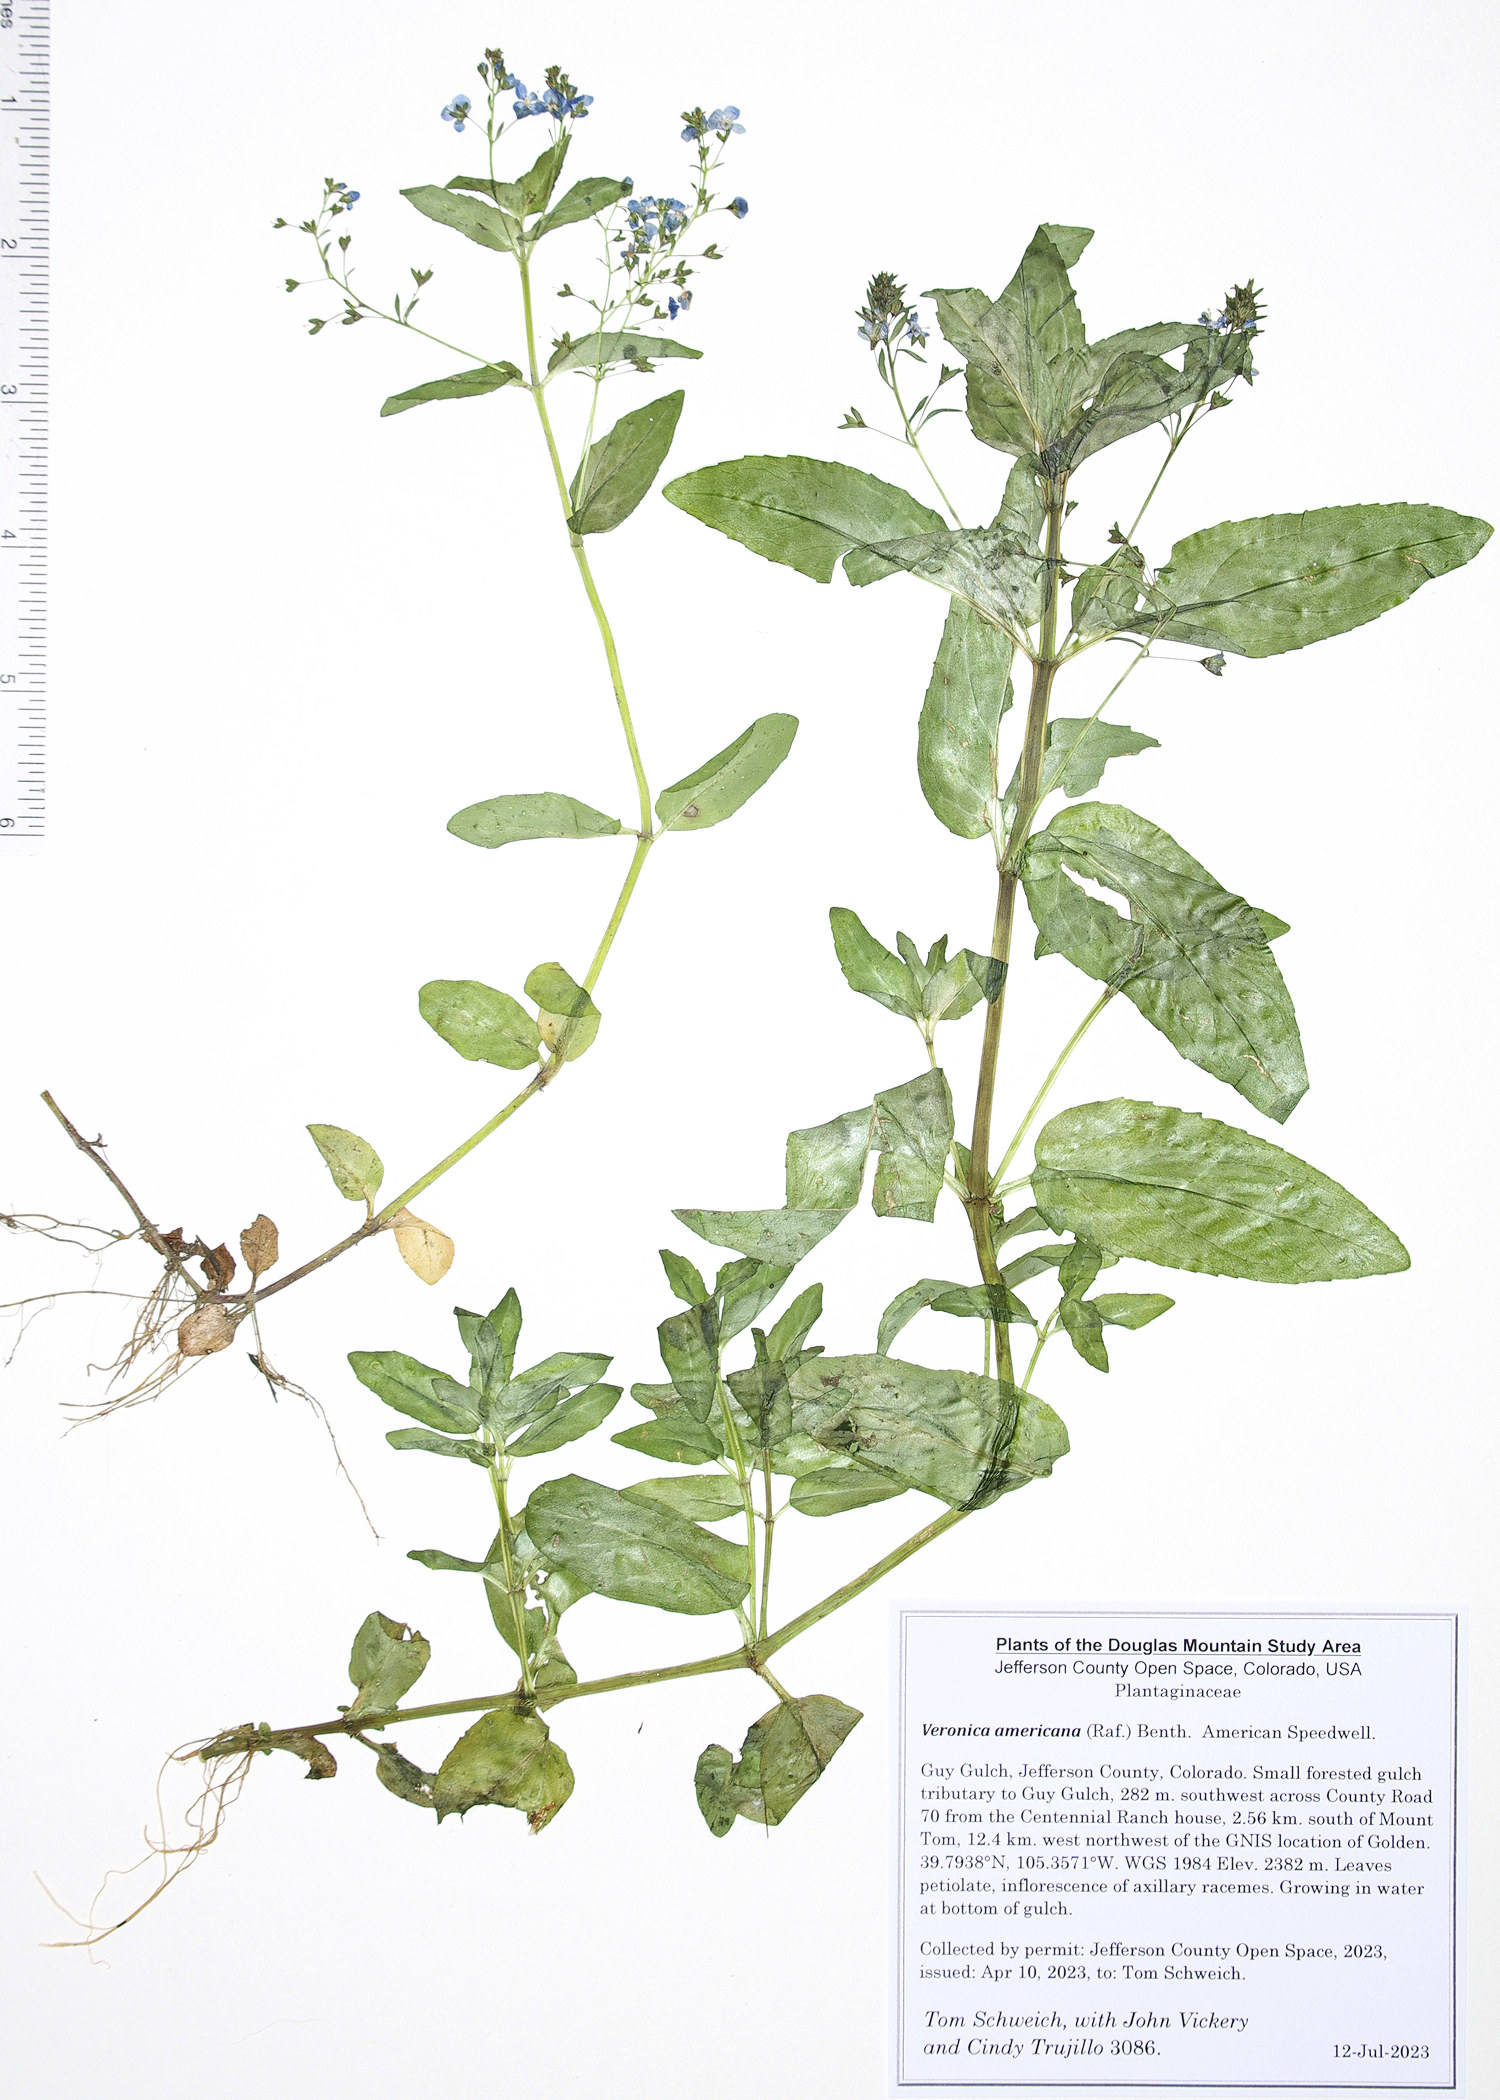 Plantaginaceae Veronica americana